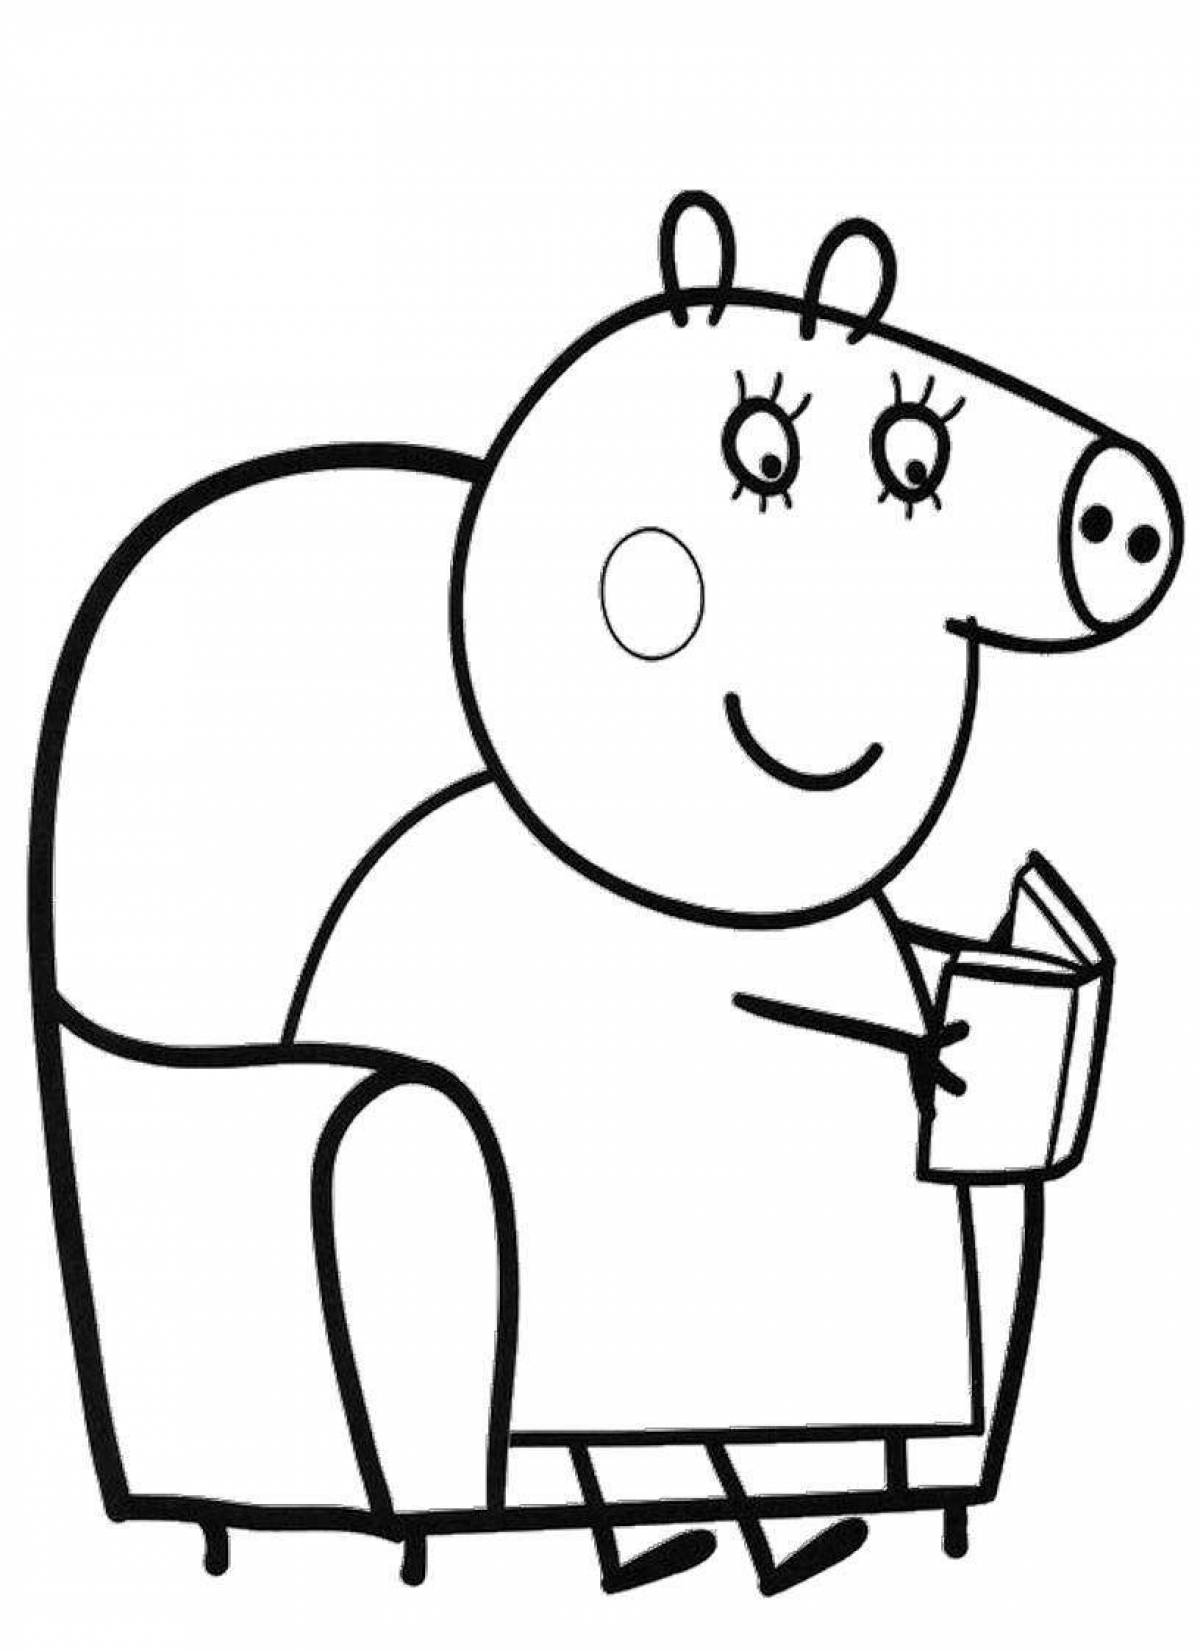 Peppa pig coloring